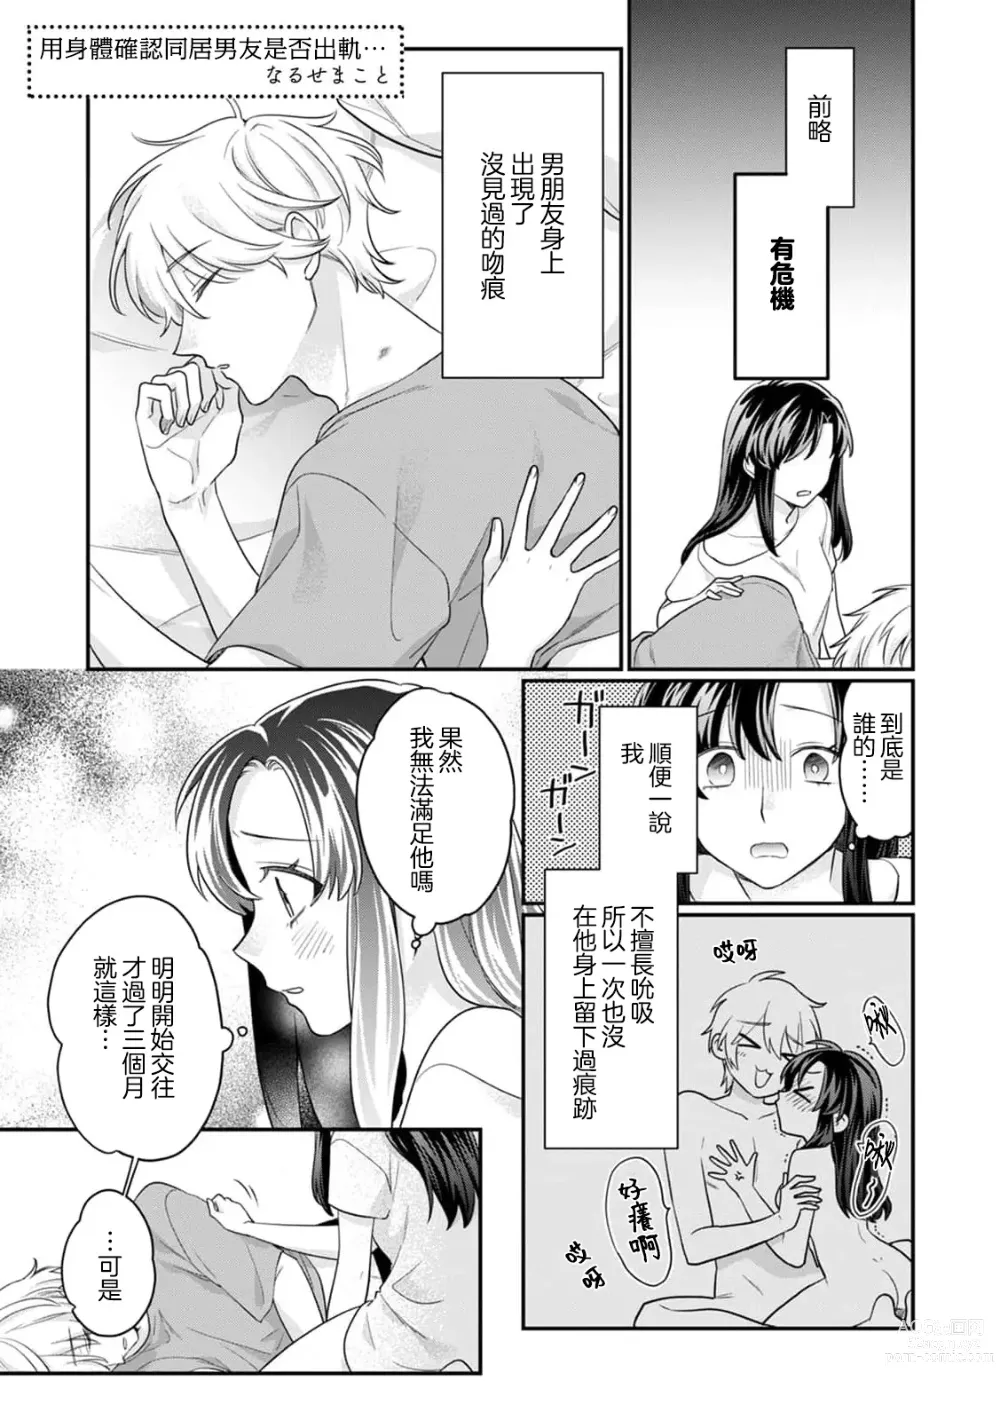 Page 2 of manga 用身体确认同居男友是否出轨…